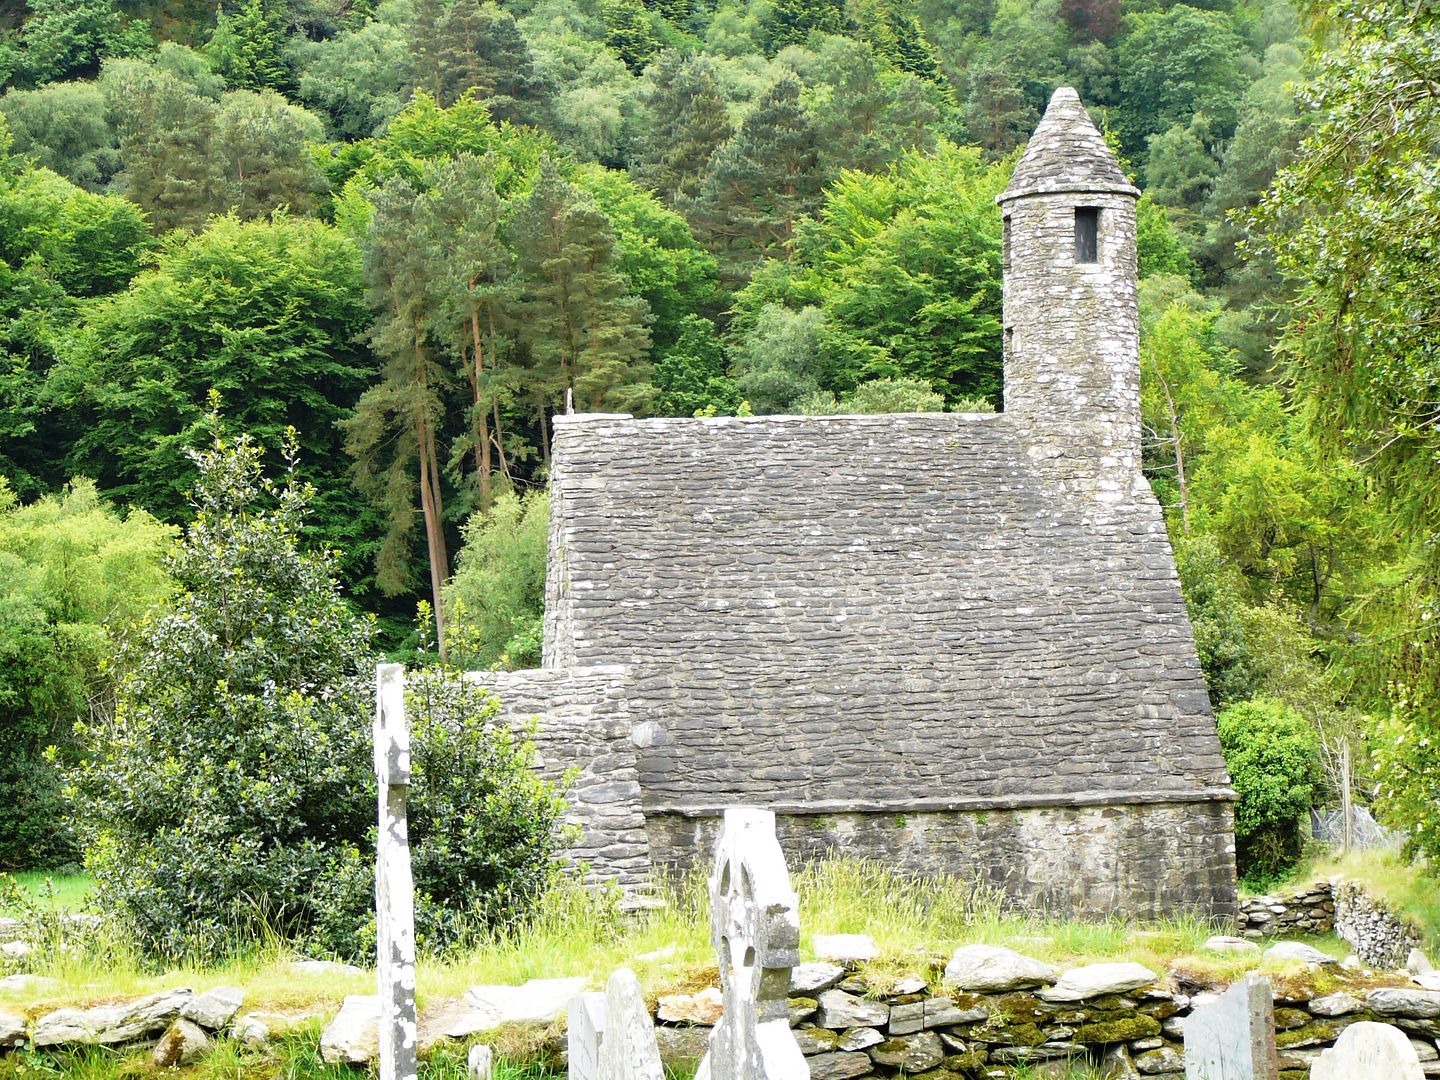 Church stone roof